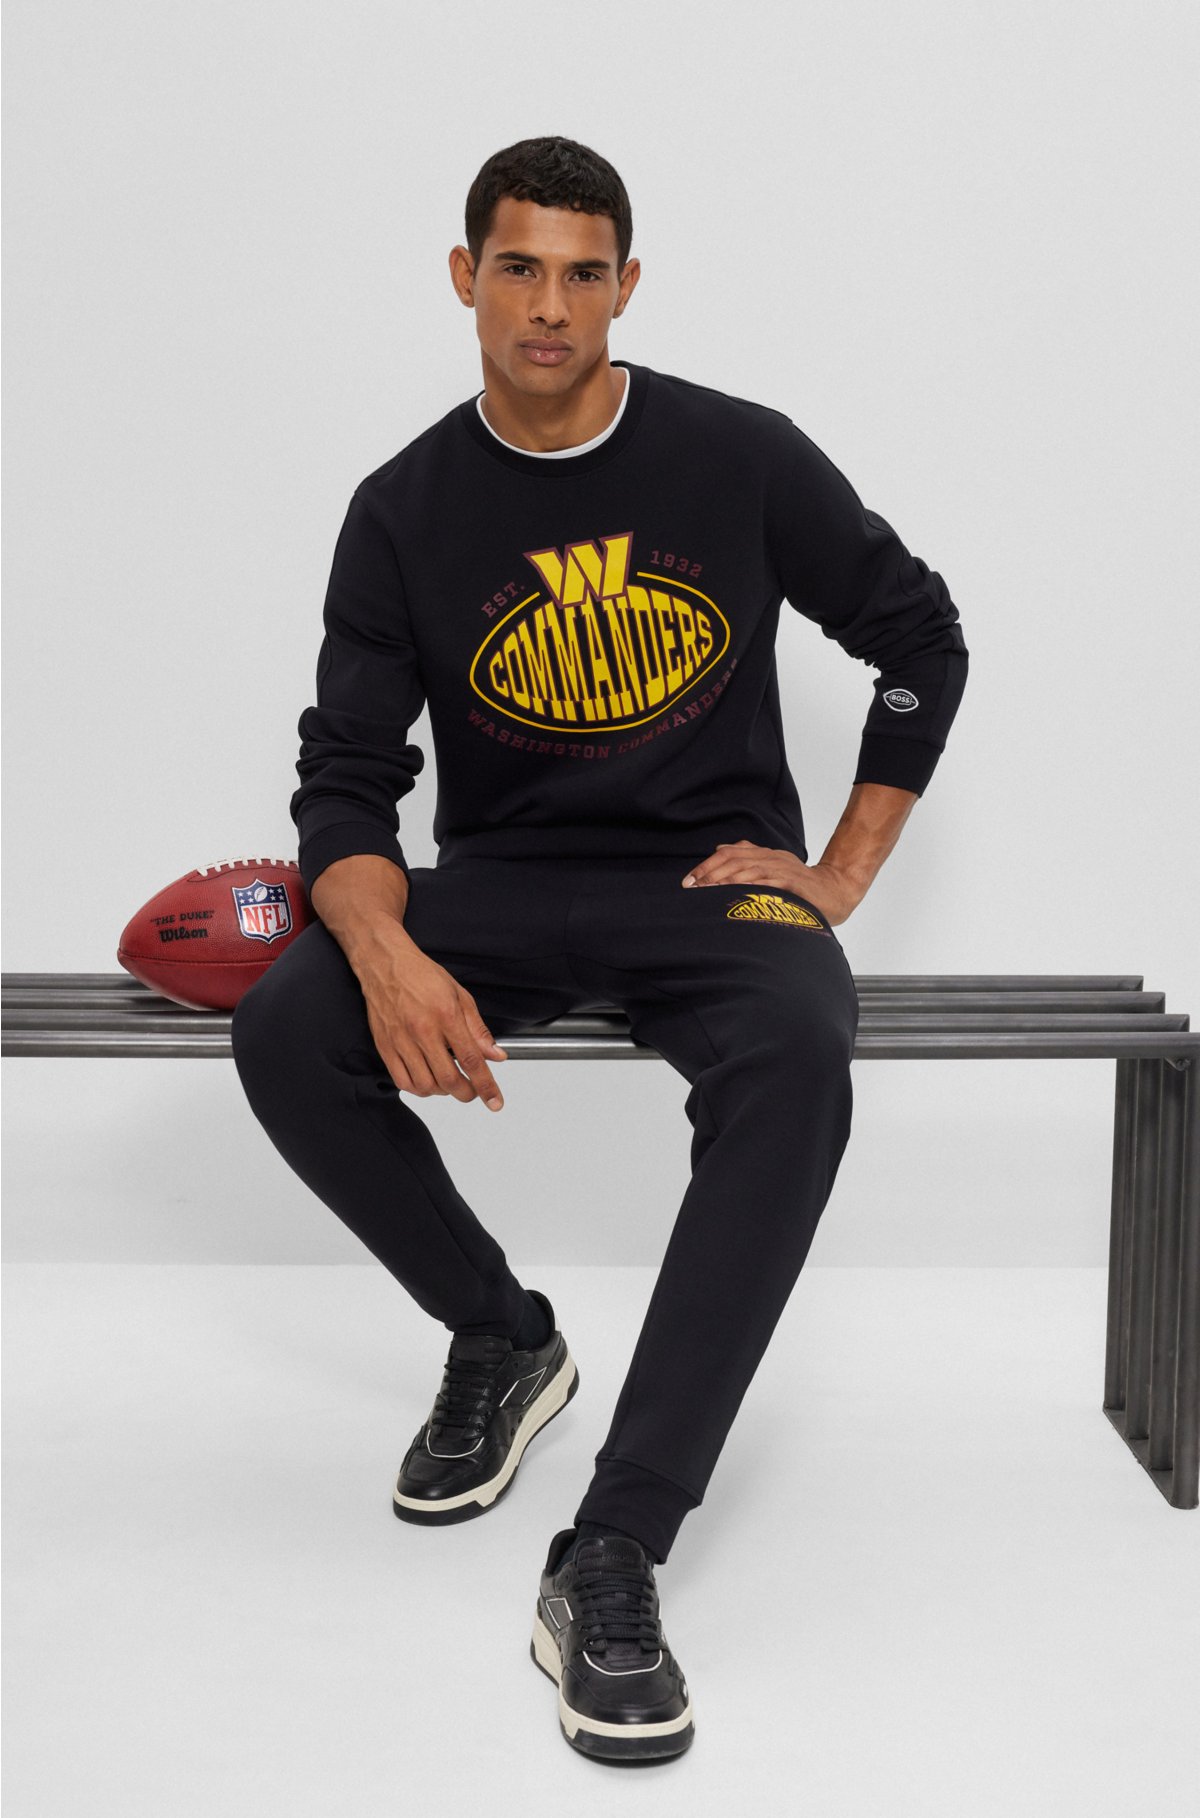 BOSS x NFL cotton-blend sweatshirt with collaborative branding, Commanders